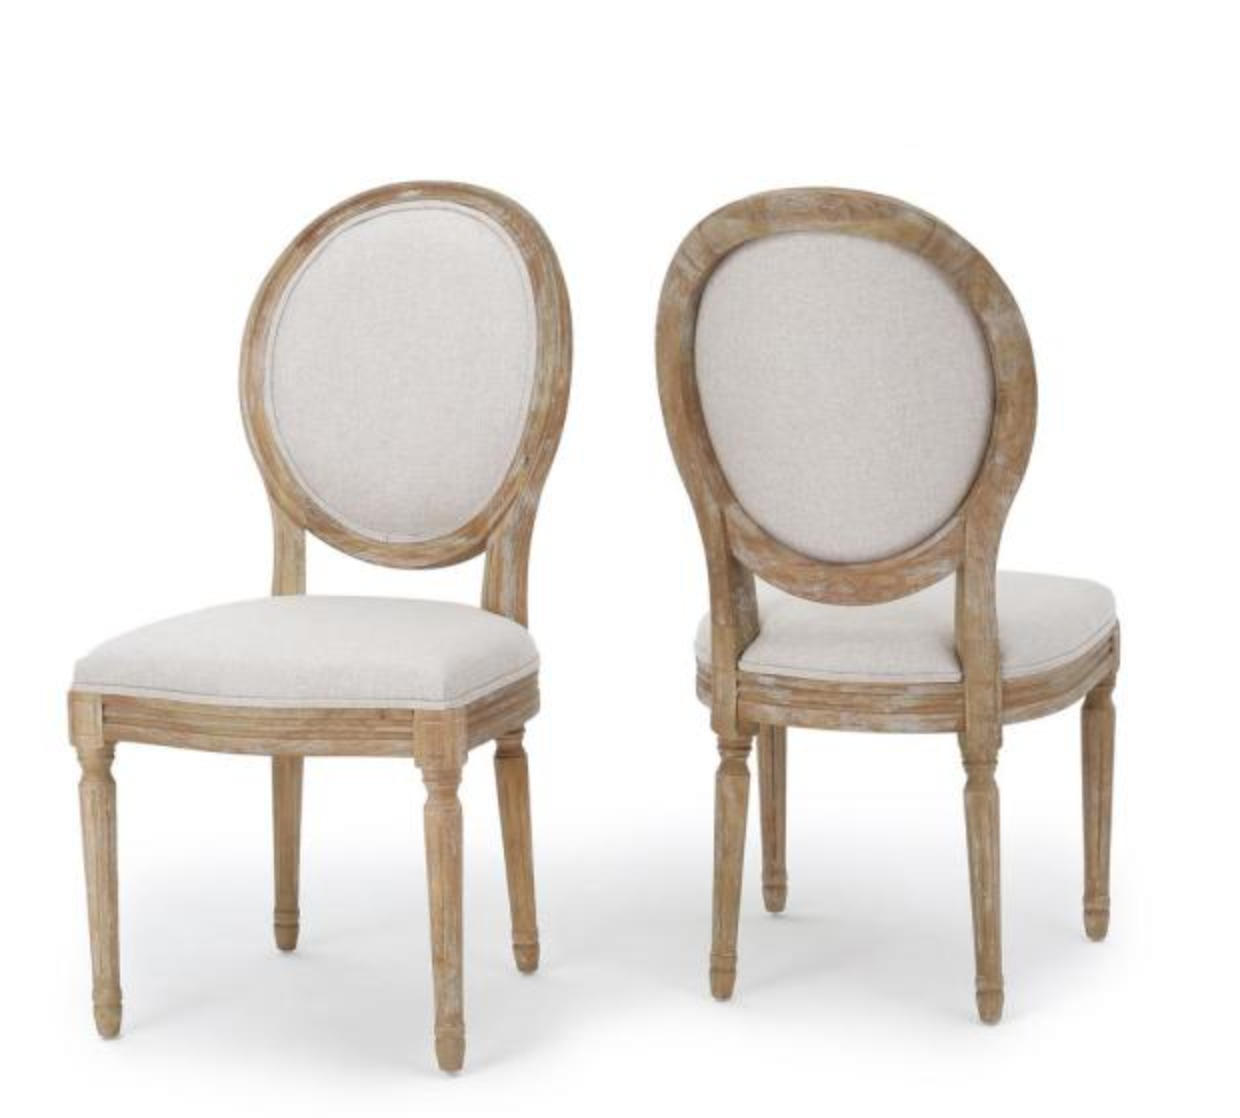 Phinneus Fabric Chairs - ironbyironwoodworks.com